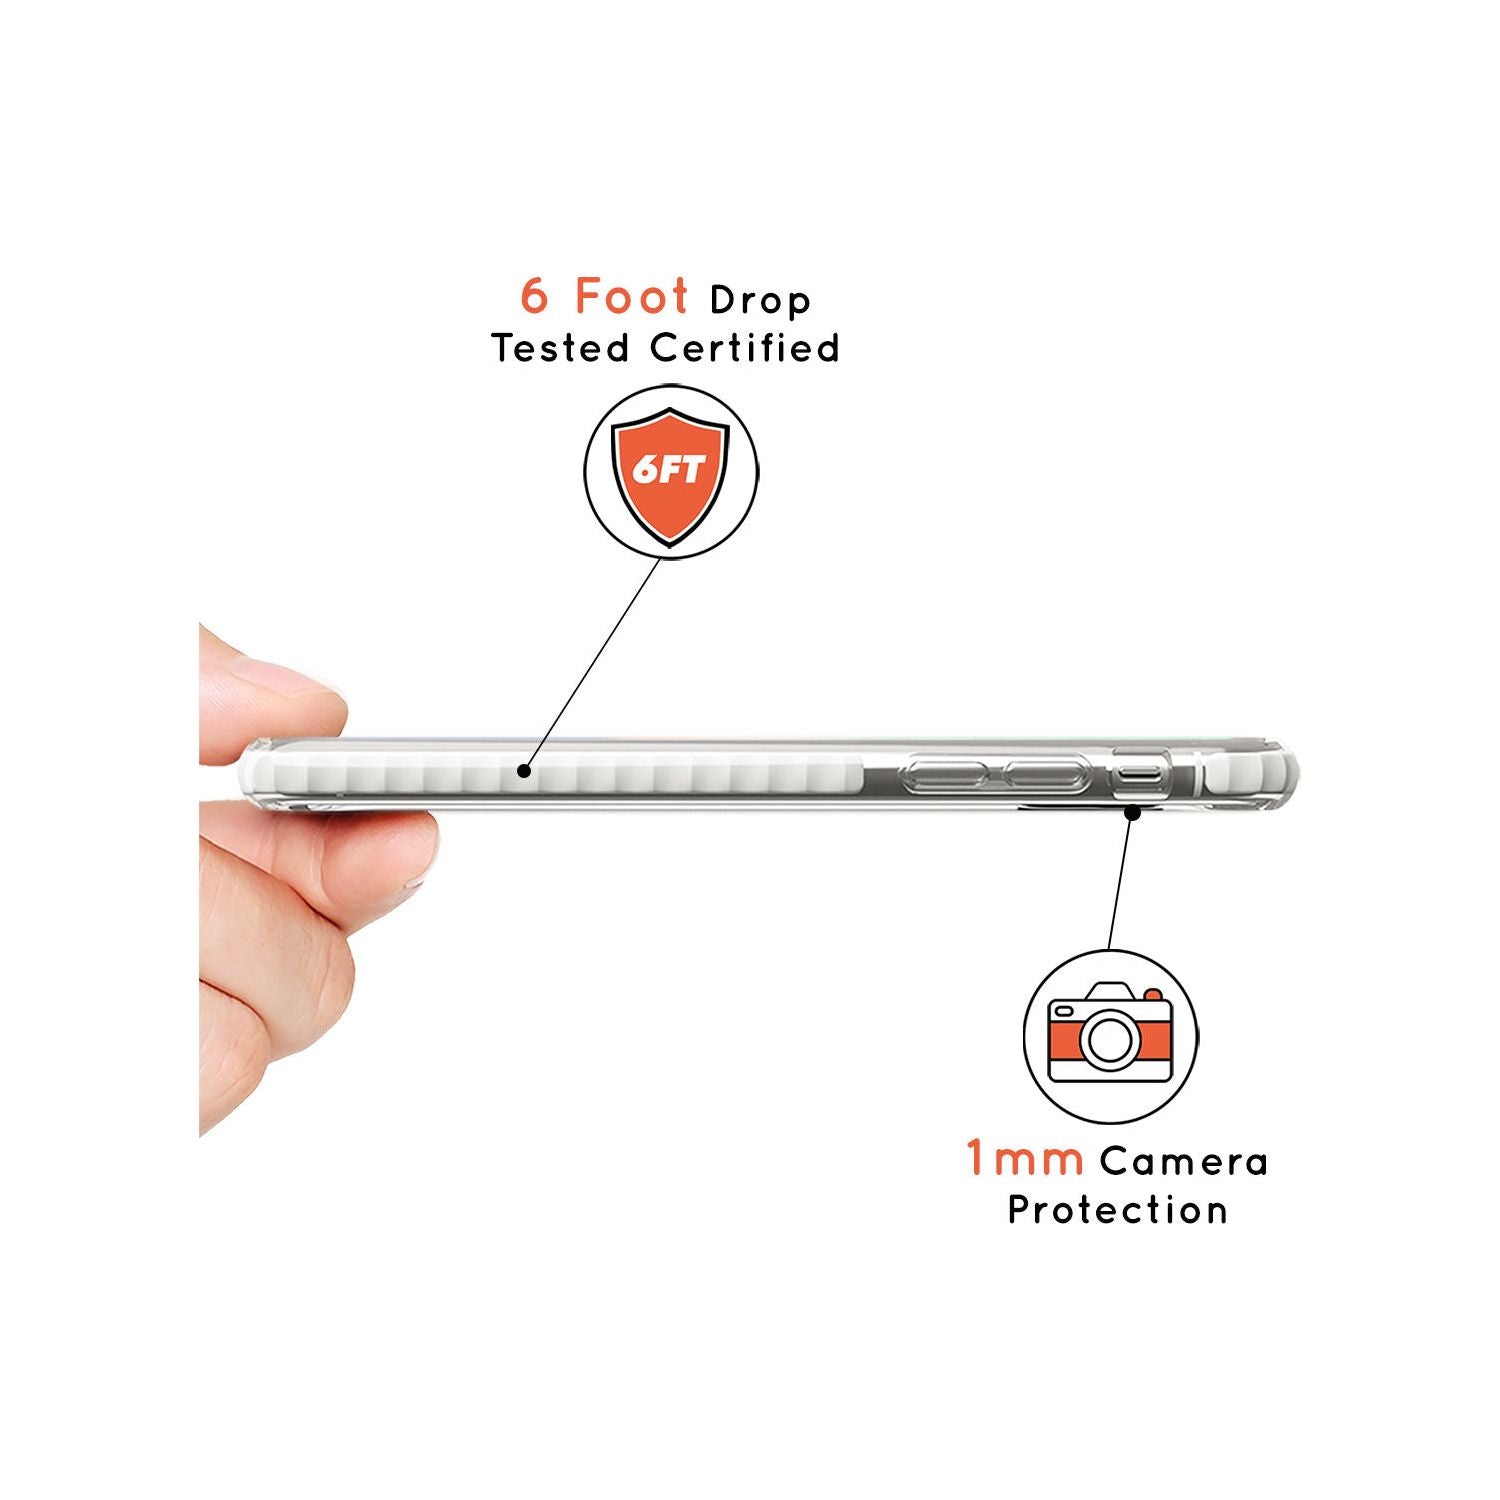 Strength Tarot Card - White Transparent Slim TPU Phone Case for iPhone SE 8 7 Plus